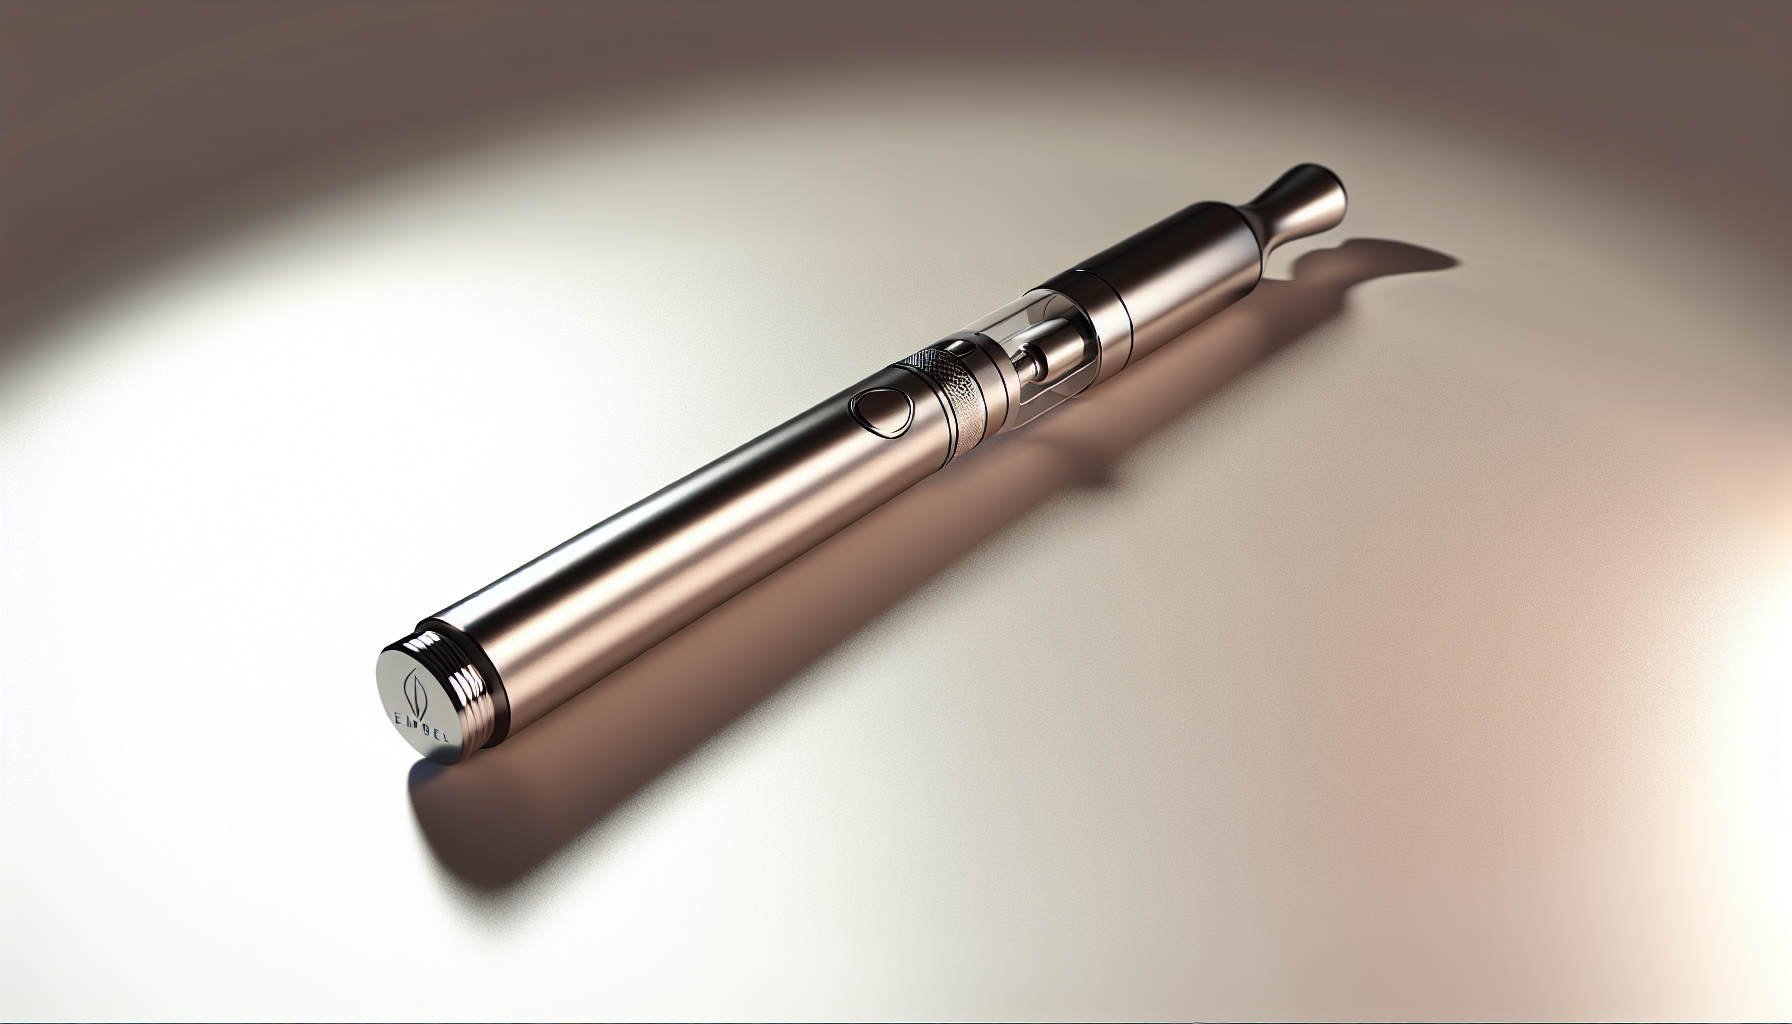 Ember Dab Vape Pen in a discreet stainless steel design